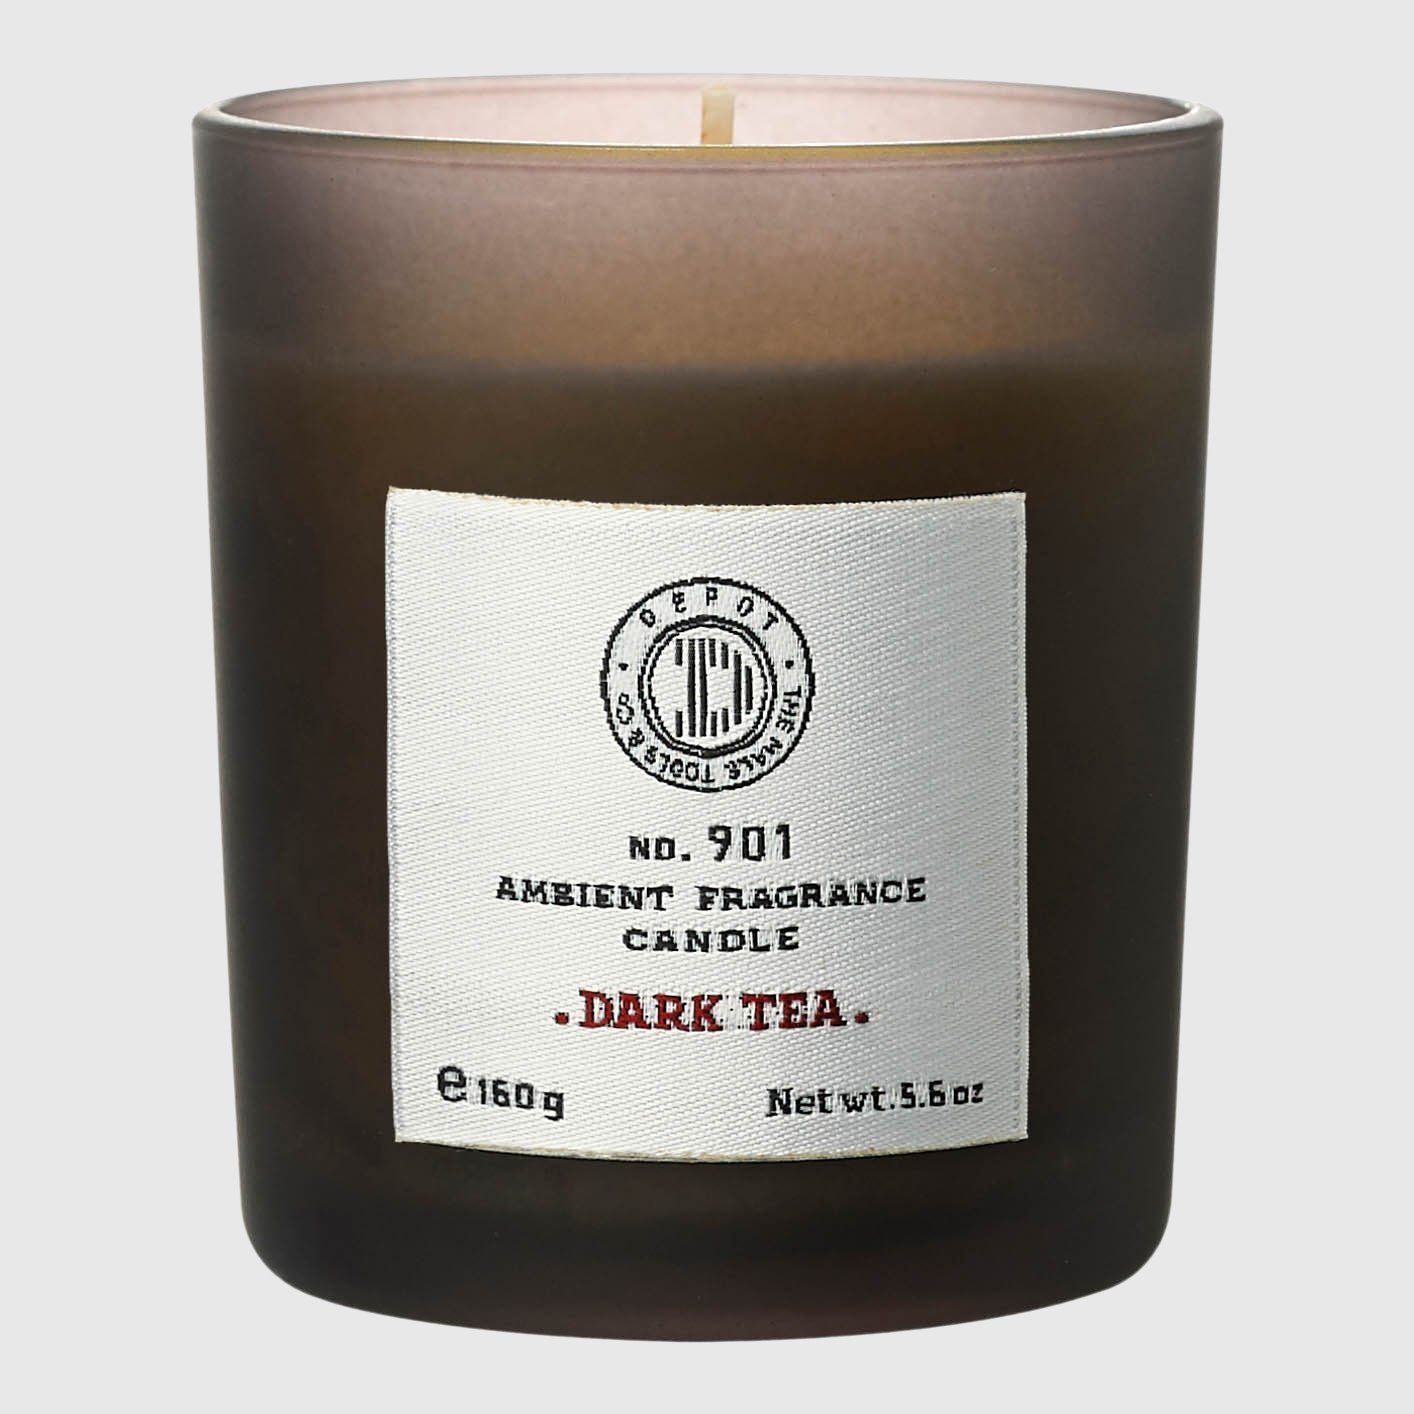 Depot No. 901 Ambient Fragrance Candle Candle Depot Dark Tea 